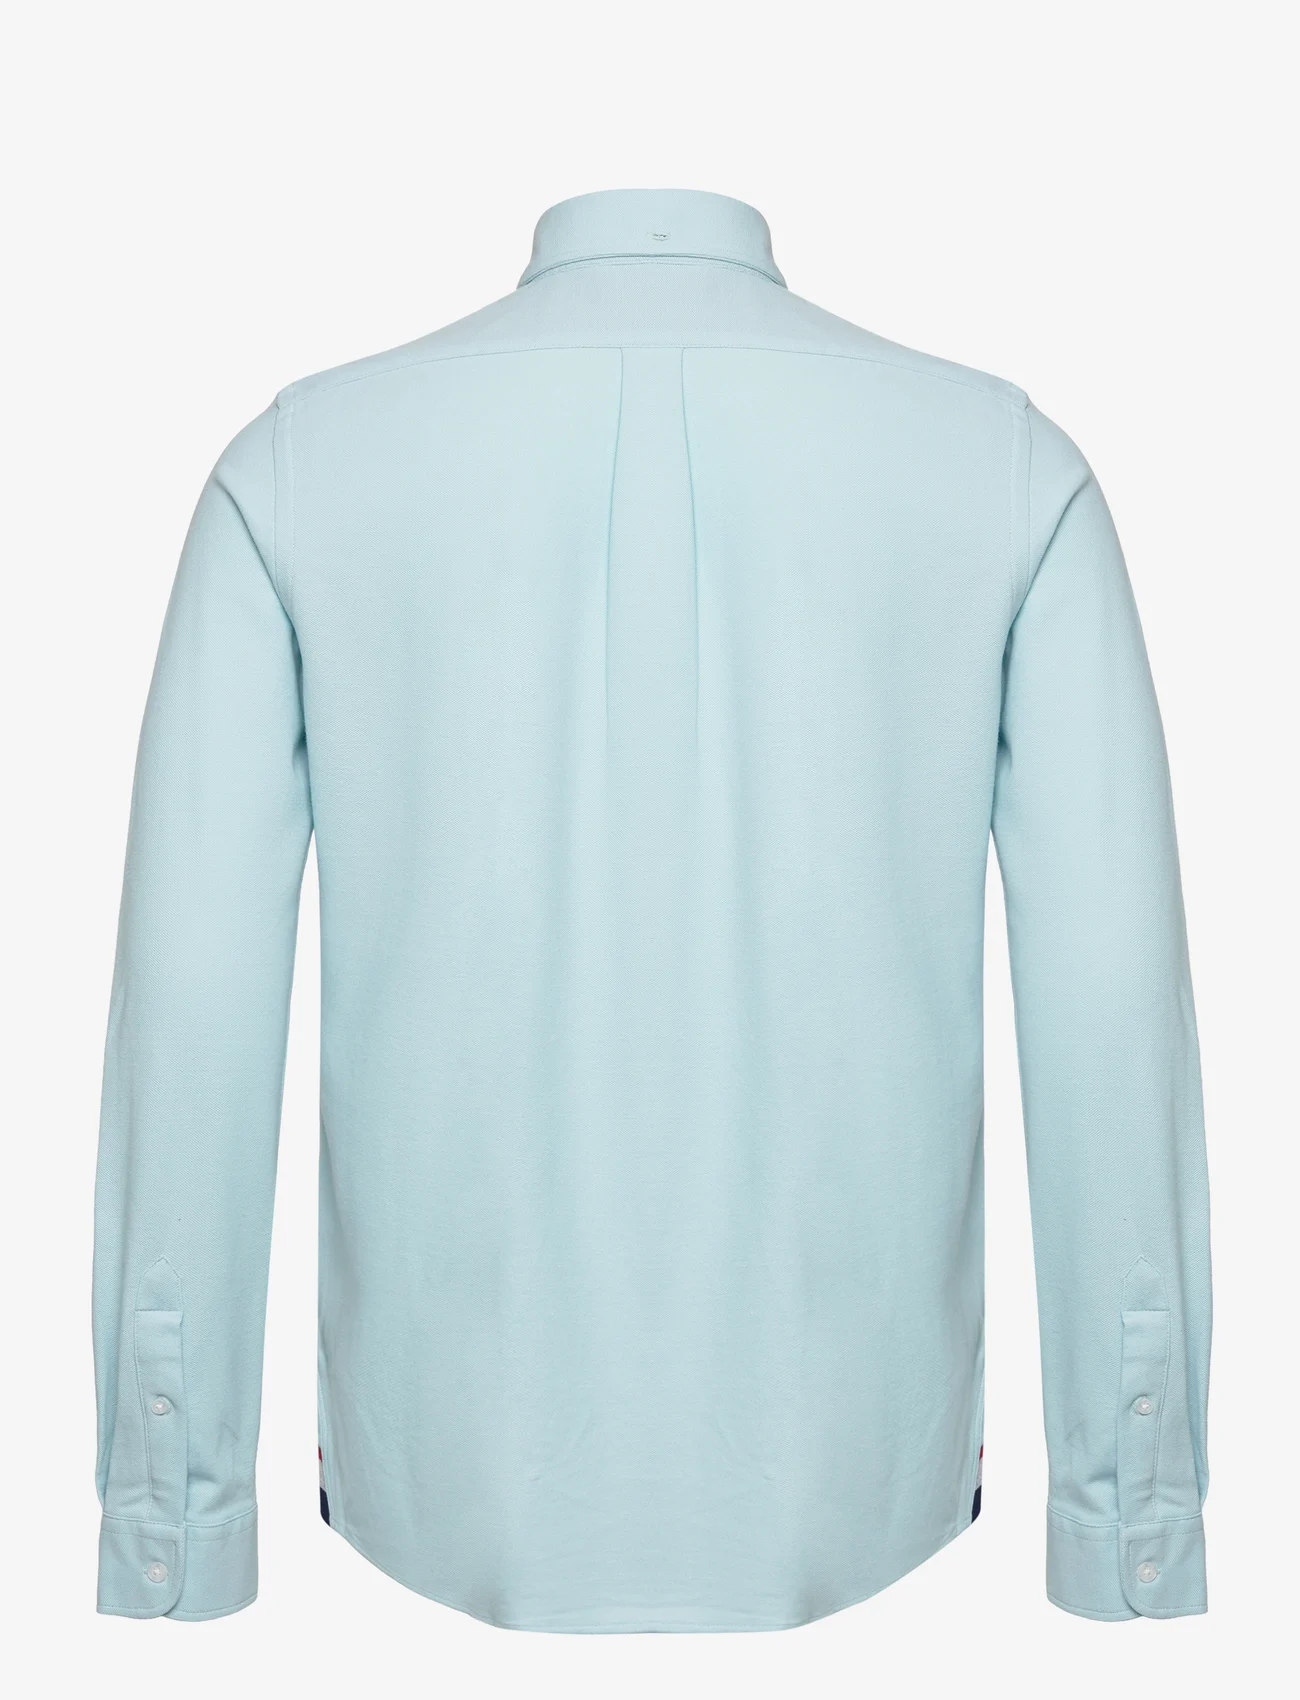 U.S. Polo Assn. - USPA Shirt August Men - basic skjortor - light blue - 1